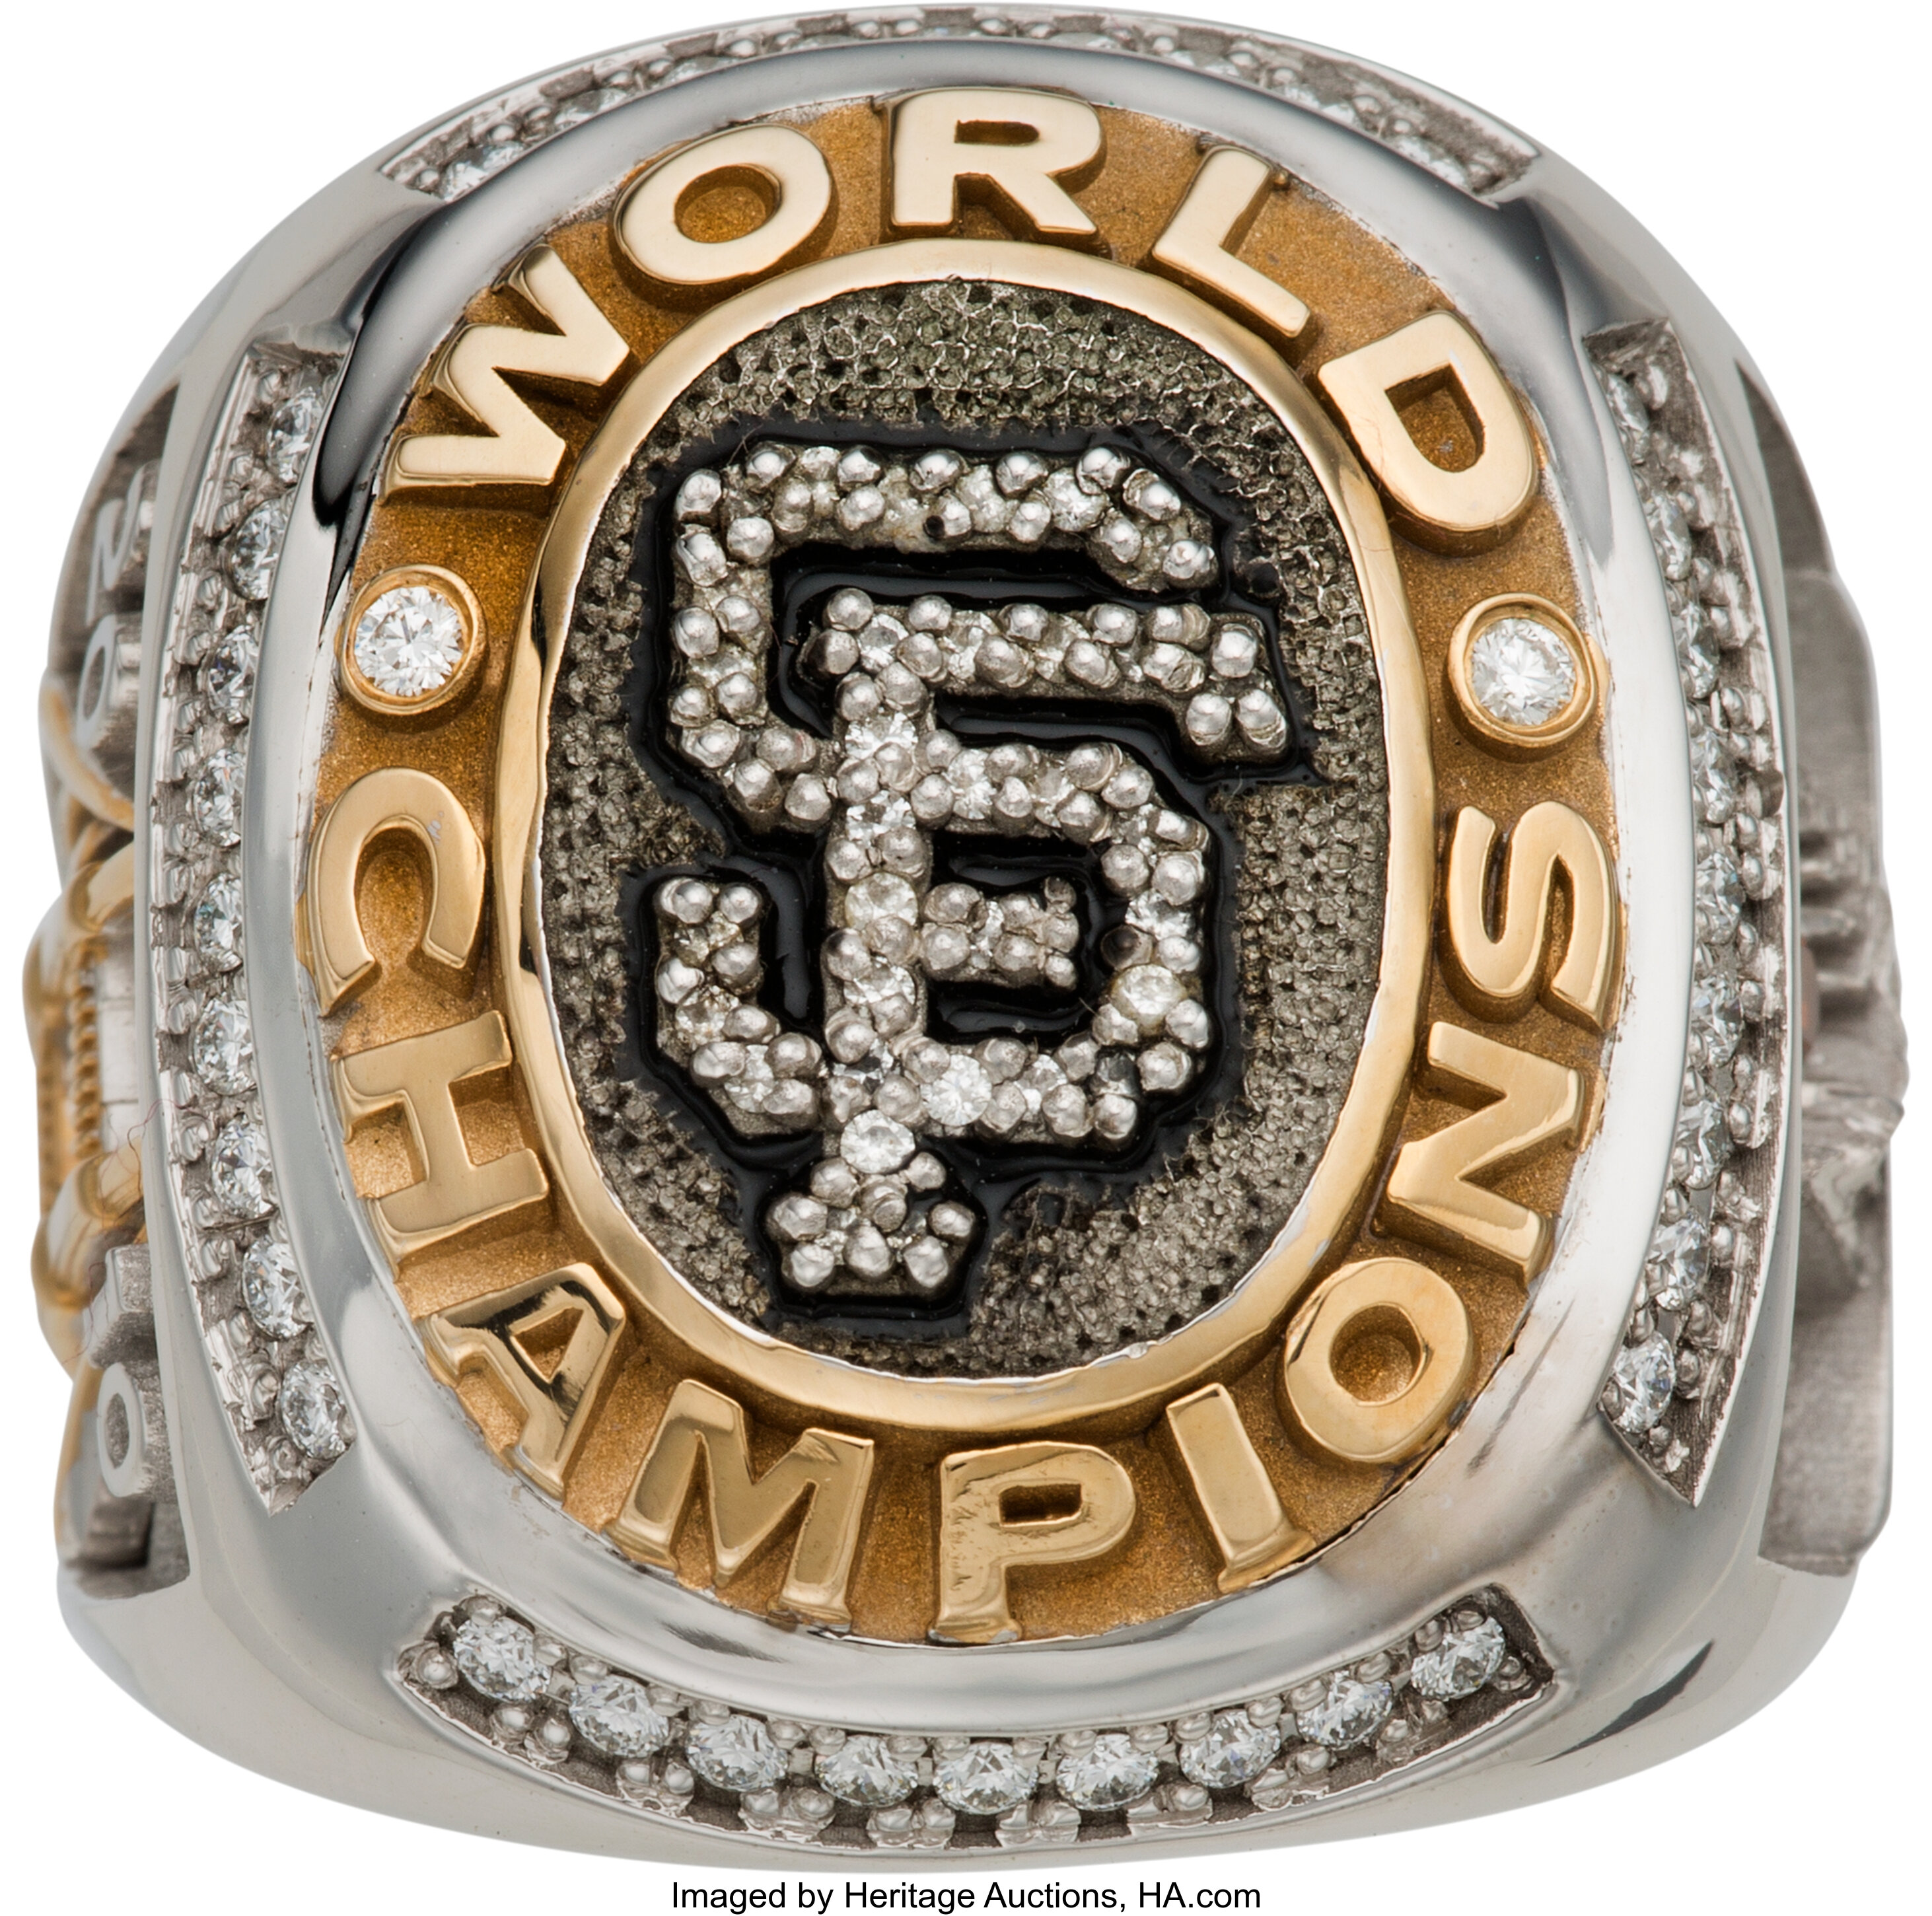 2010 San Francisco Giants World Series Championship Ring Presented